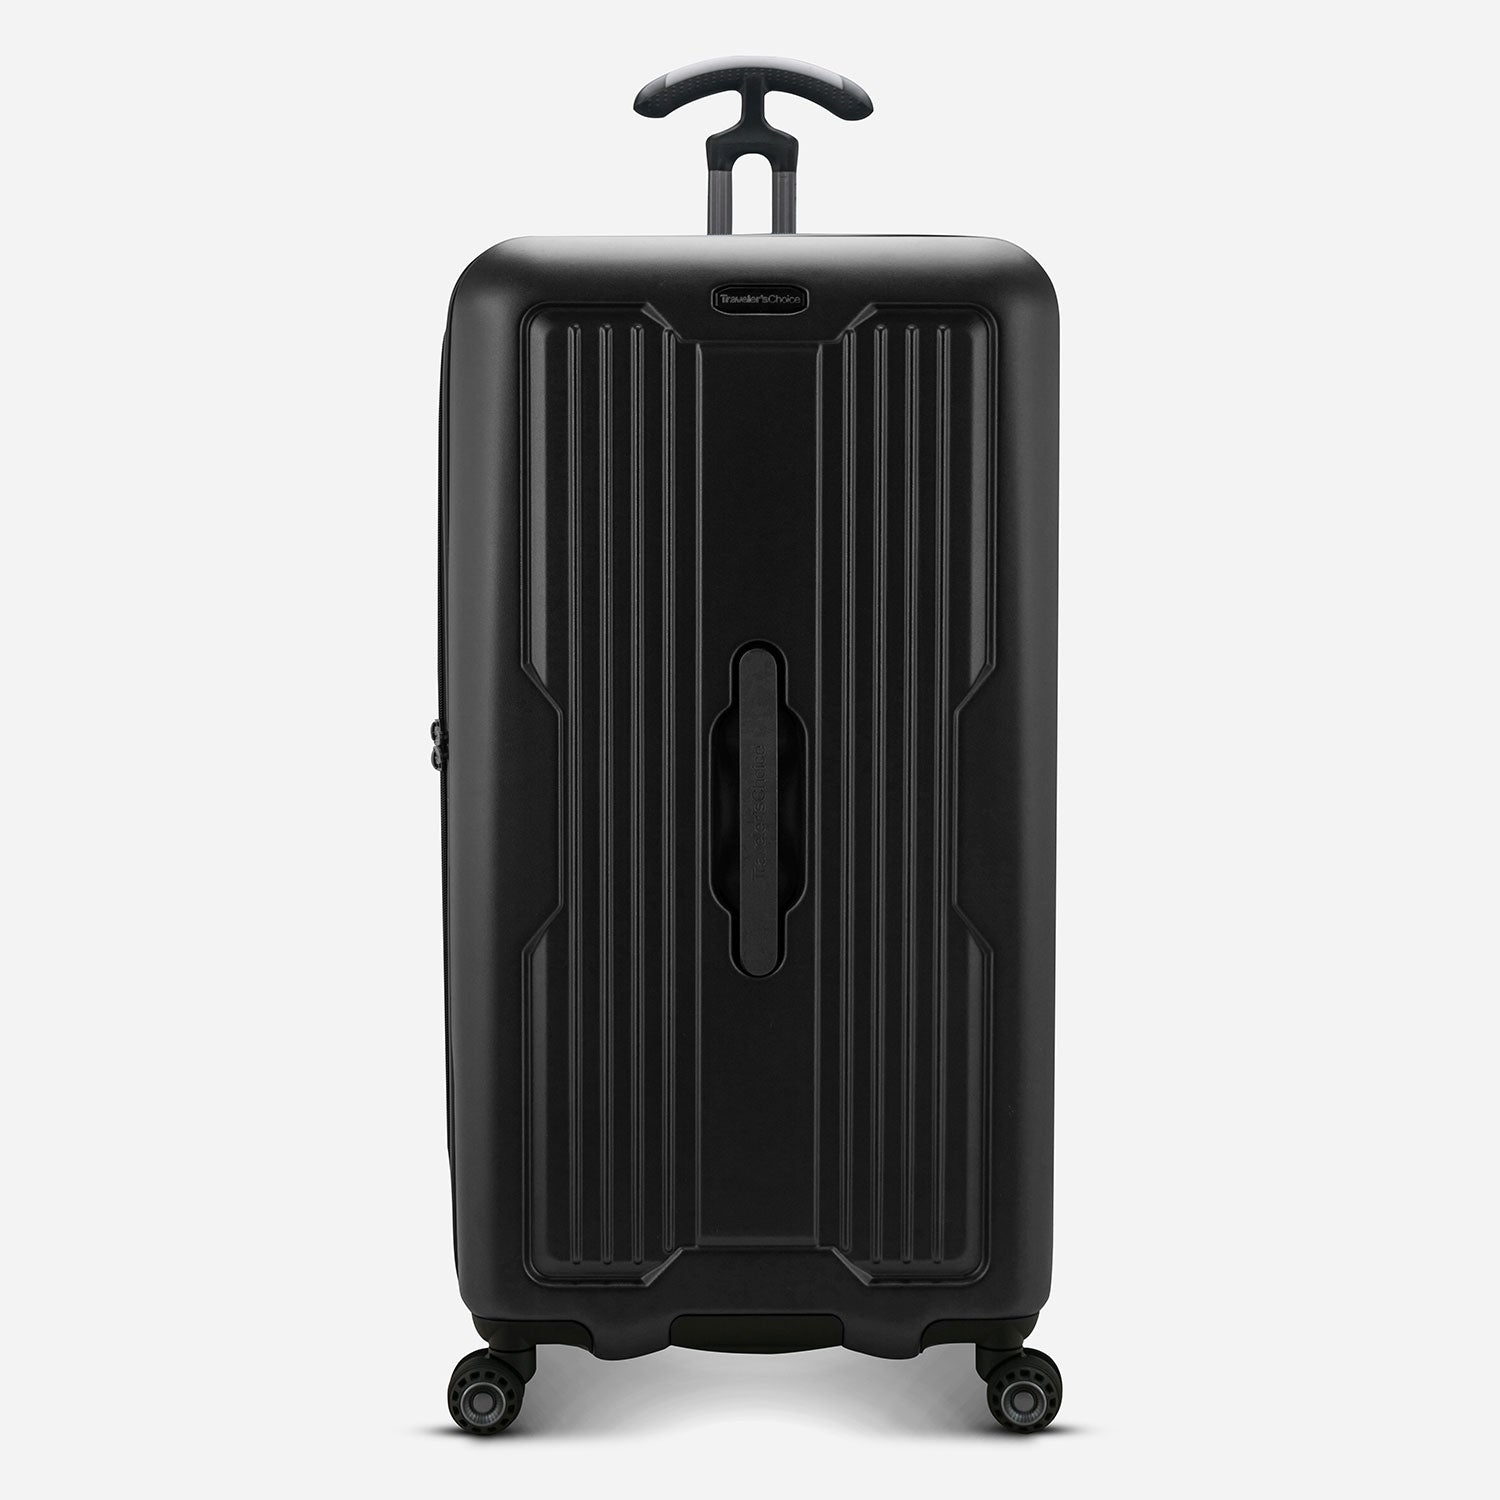 Traveler's Choice Ultimax Hardside Spinner, Black, 30 Trunk Luggage